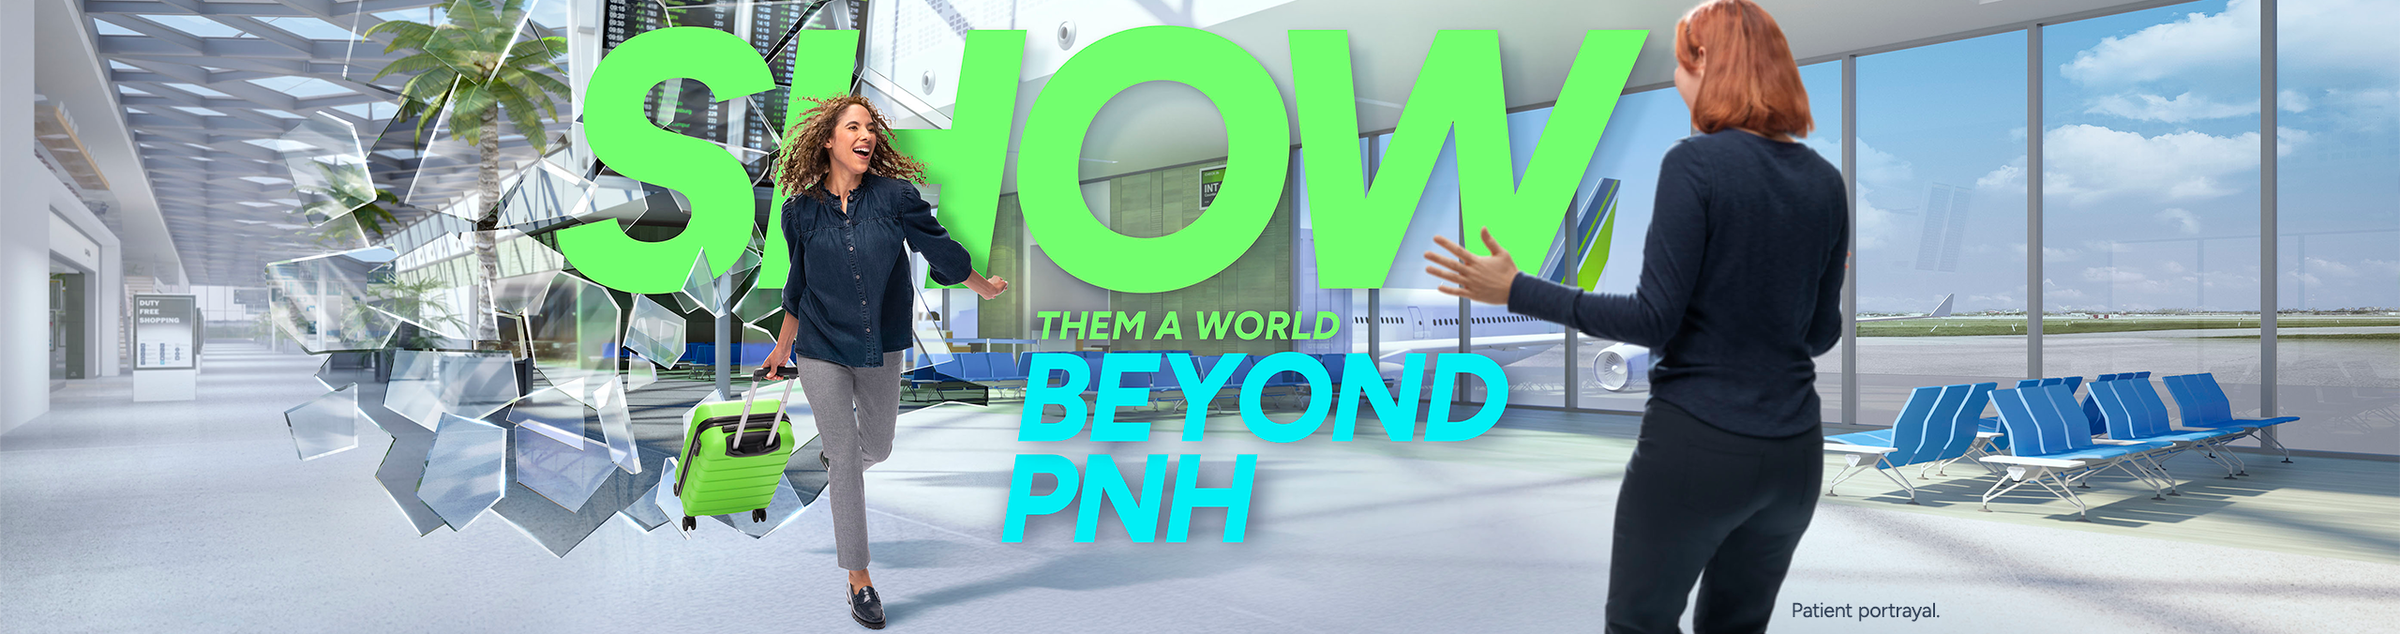 Show them a world beyond PNH.